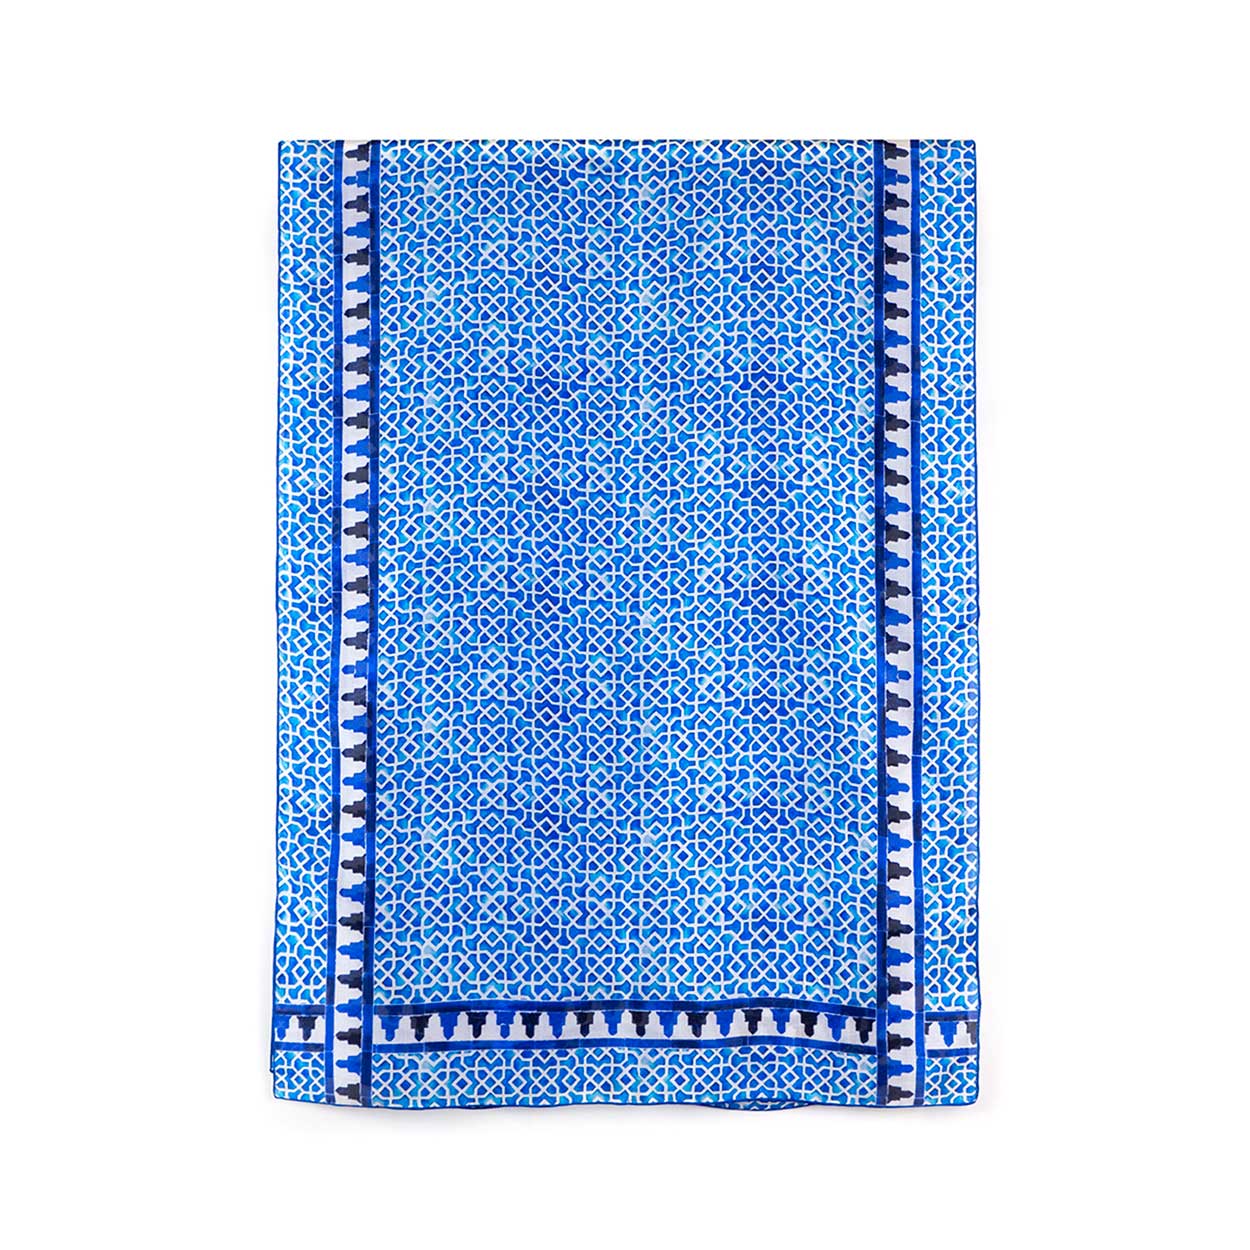 Large blue silk scarf featuring Islamic pattern print